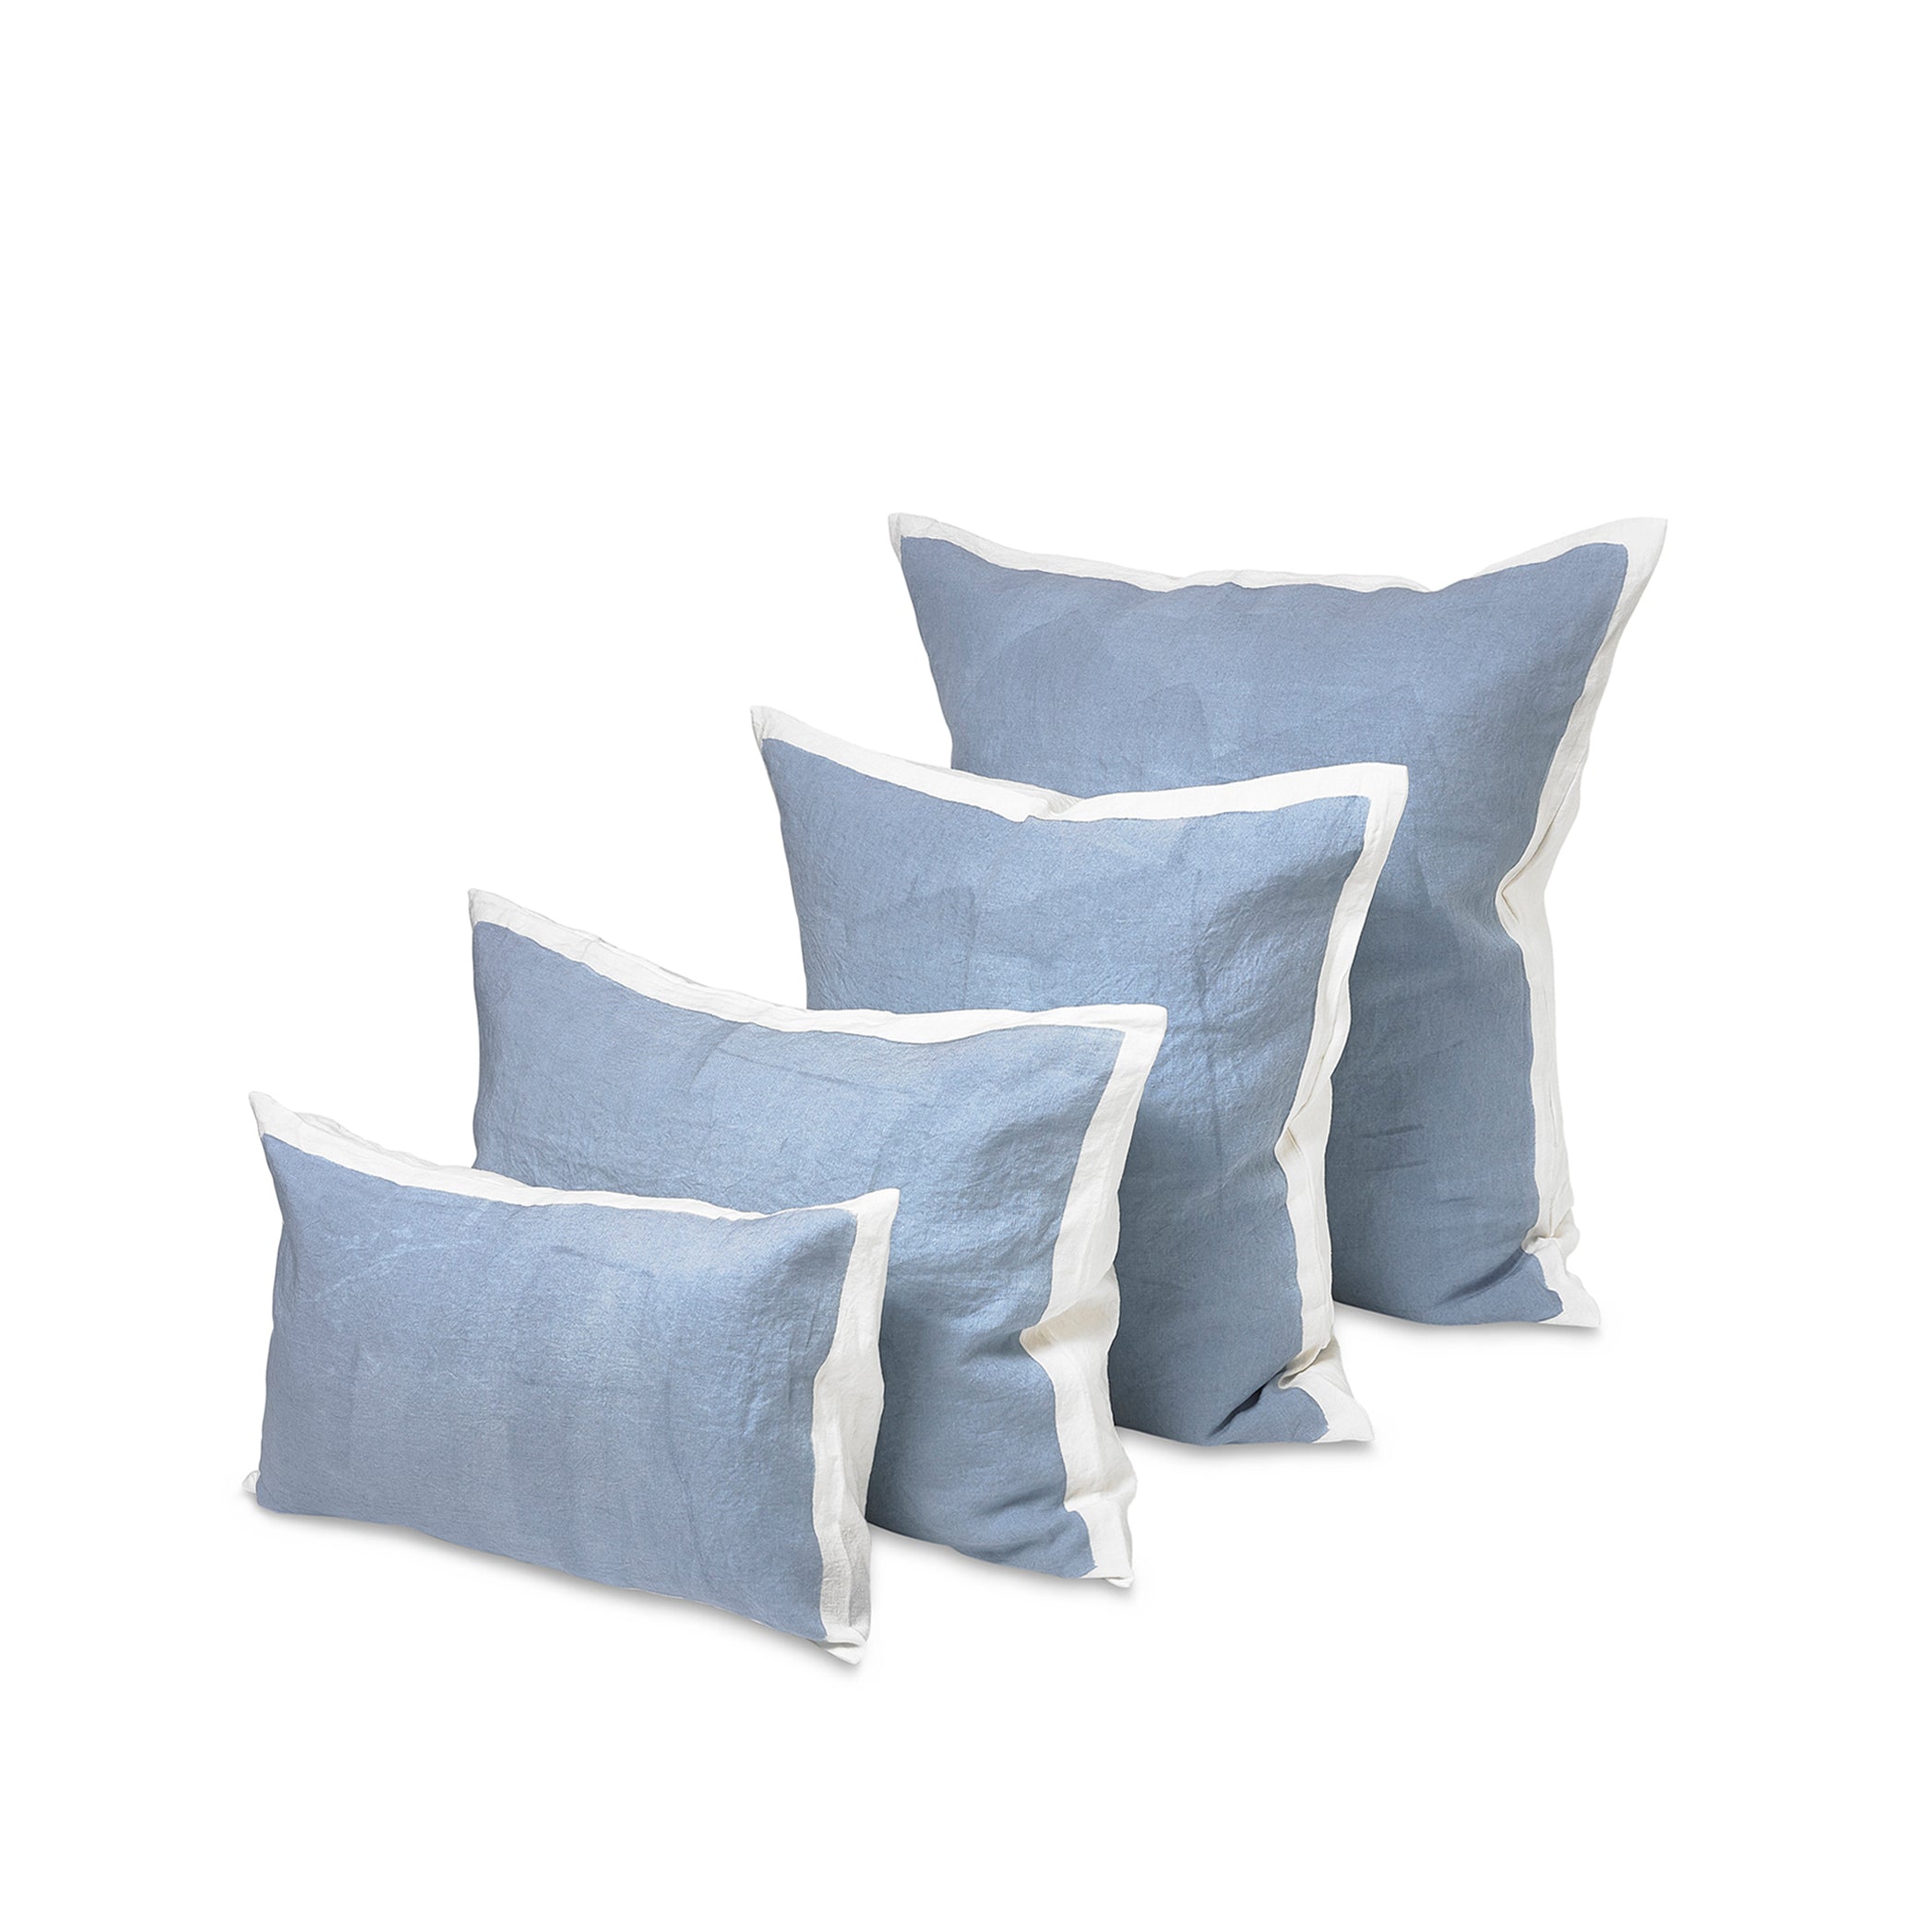 Hand Painted Linen Cushion in Pale Blue, 60cm x 40cm